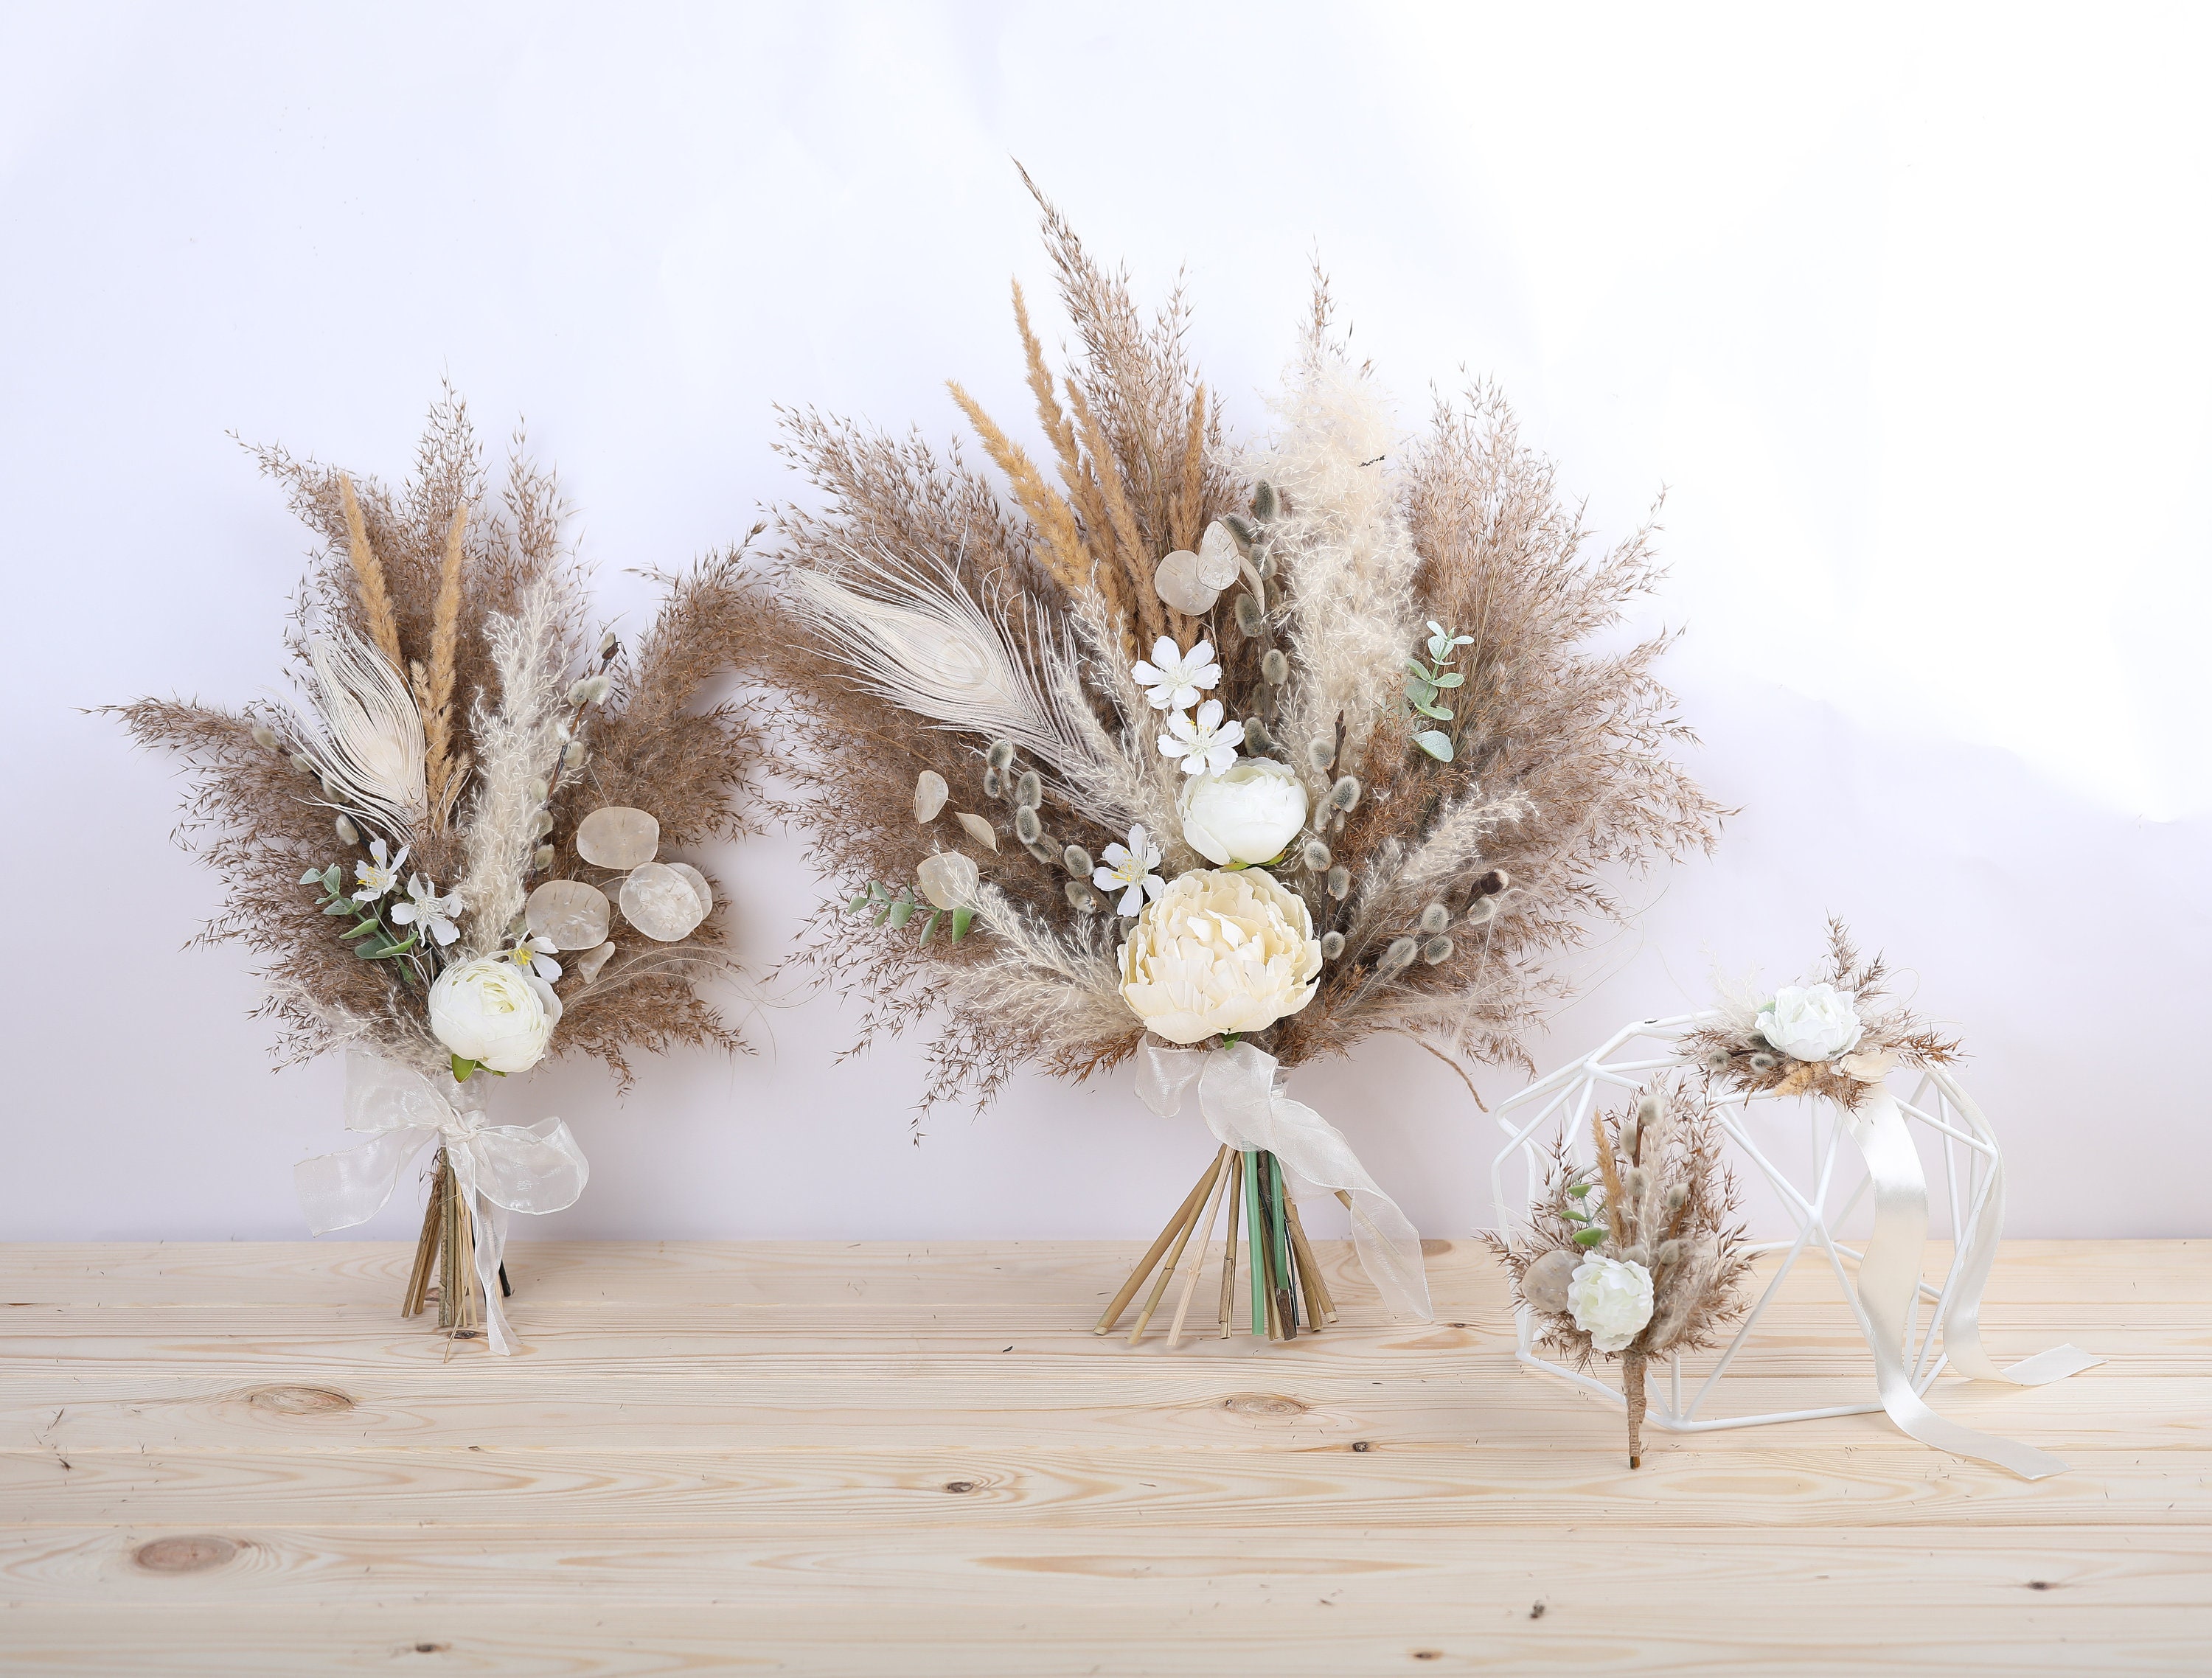 Neutral Earthy Tone Dried Flowers Bouquet / Wildflowers Bouquet / White  Muted Tone Flowers Arrangement 